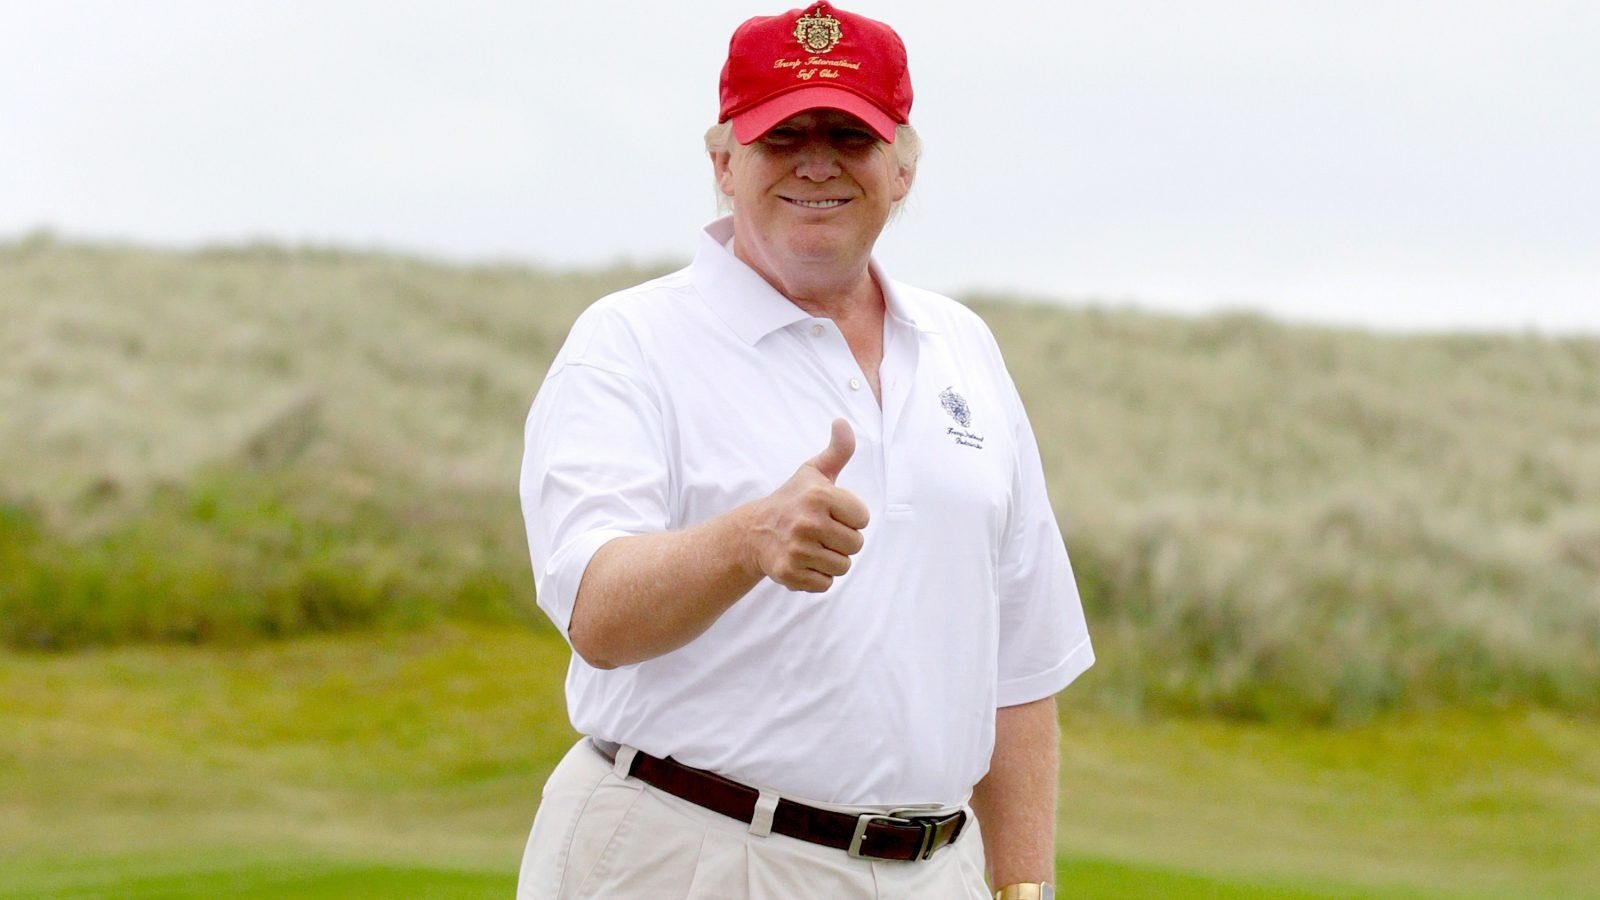 Donald Trump kiepsko gra w golfa?